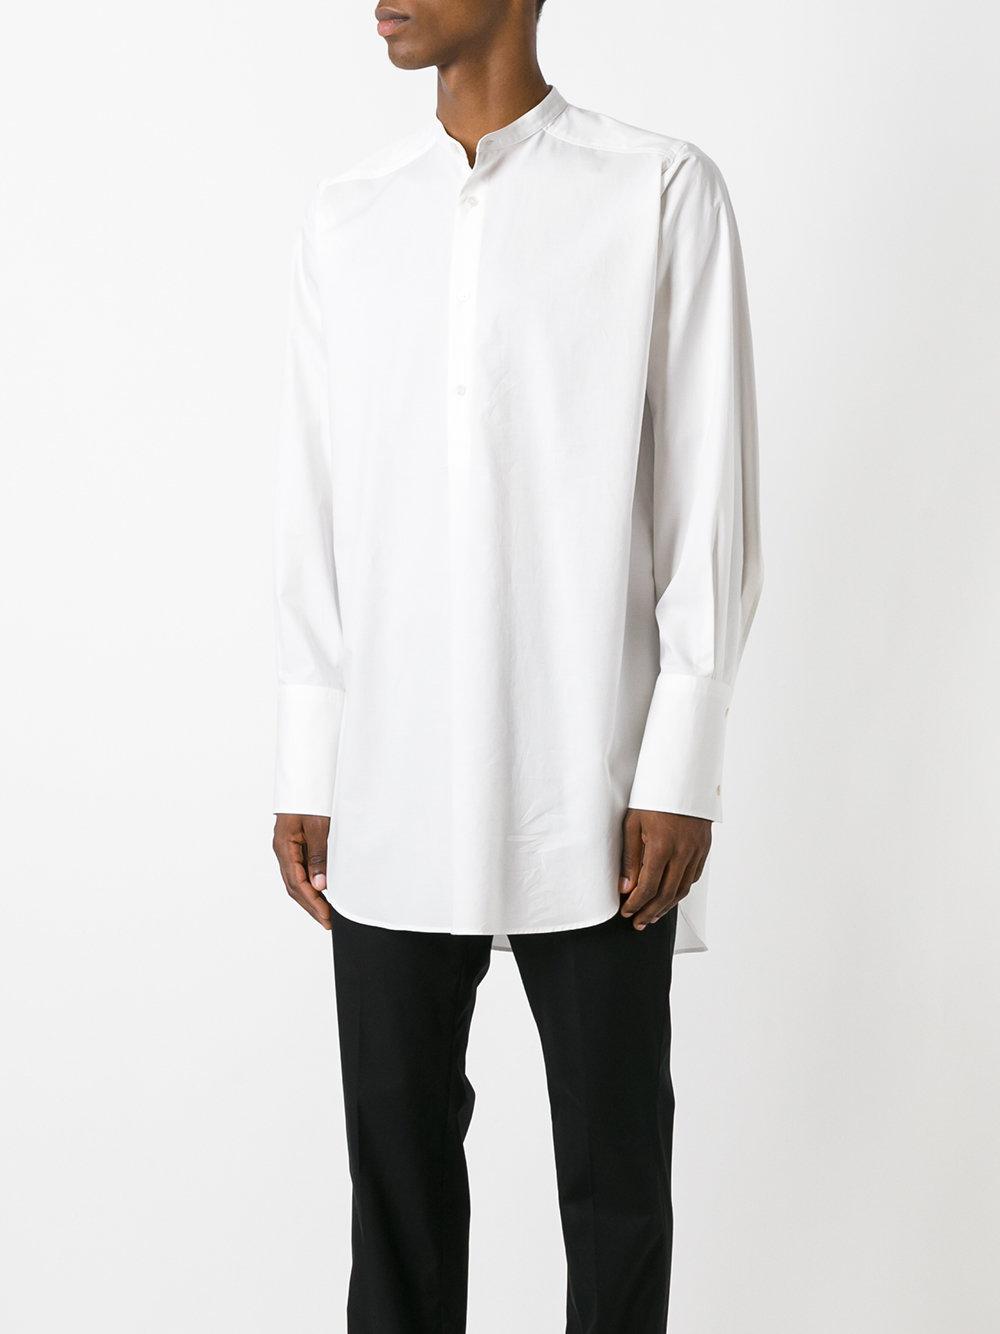 Lyst - Stella Mccartney Collarless Shirt in White for Men